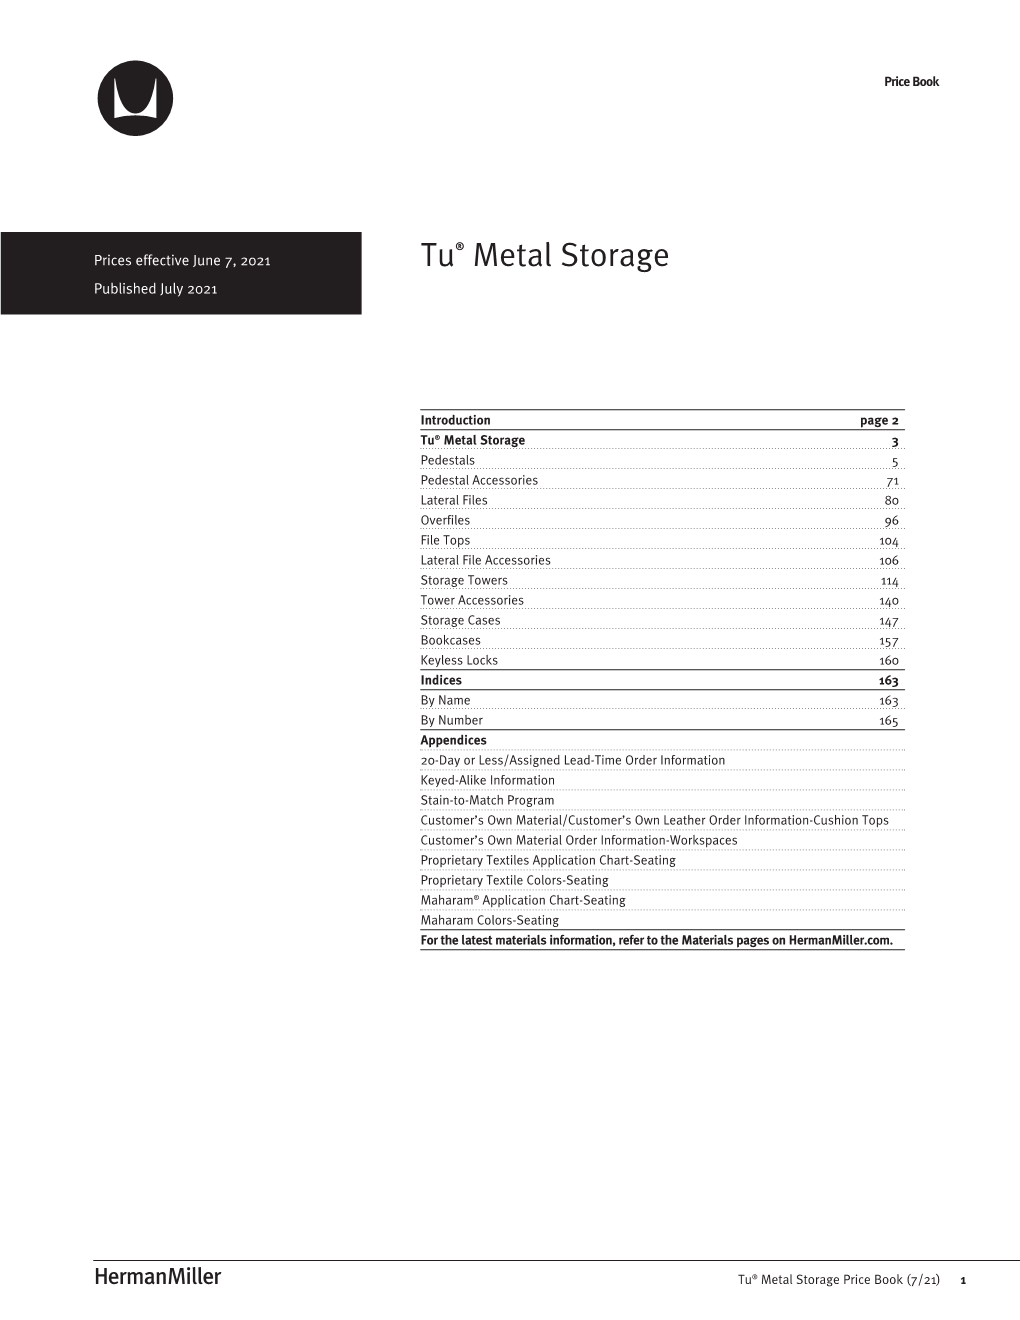 Price Book: Tu Metal Storage